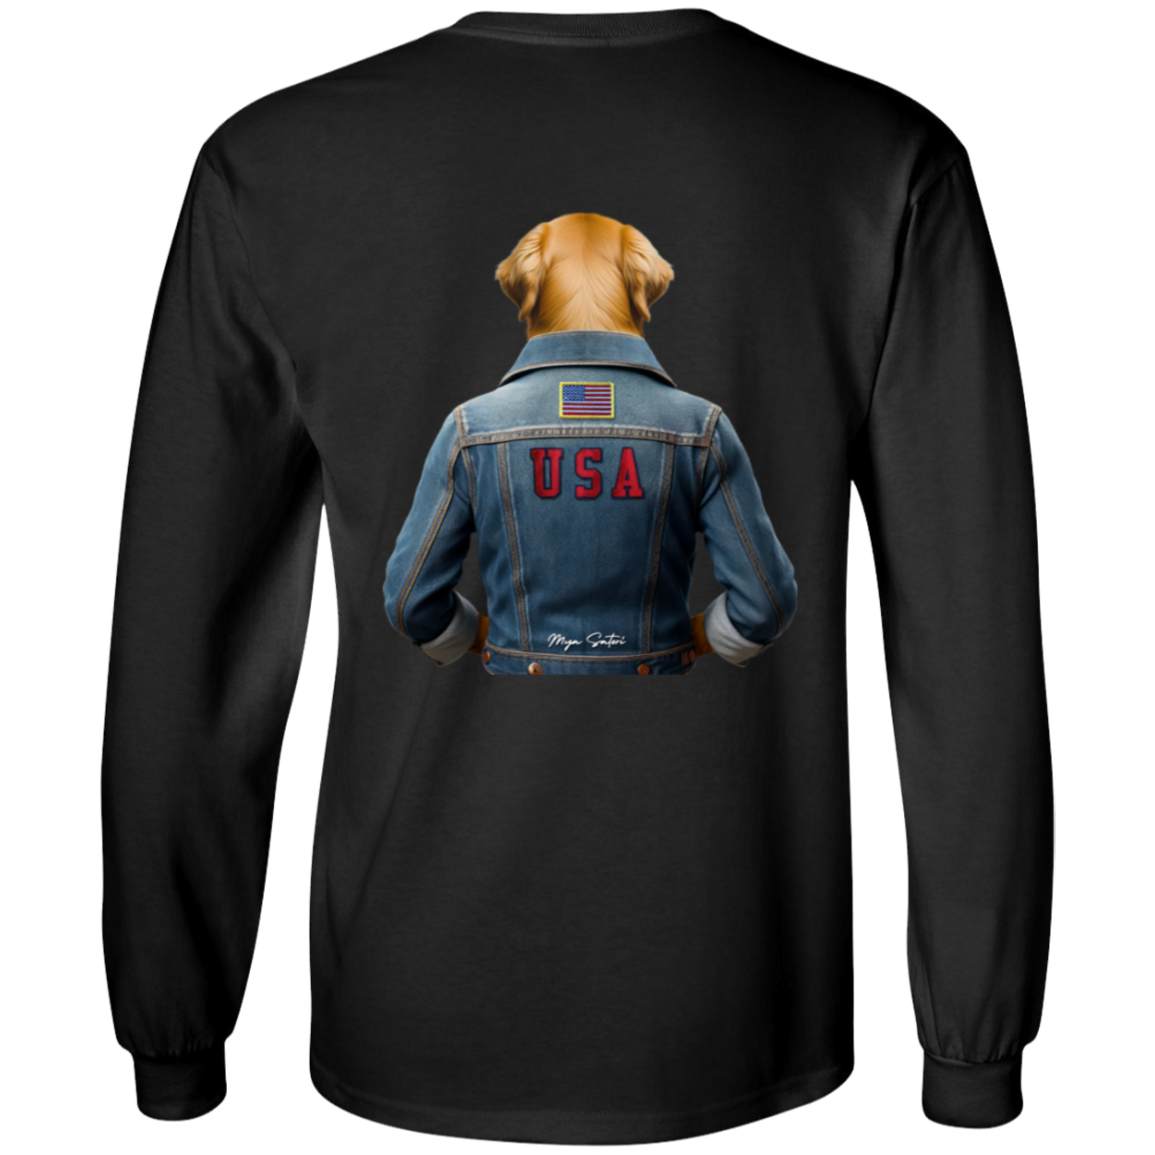 Dog | Men's Ultra Cotton T-Shirts - Long Sleeve